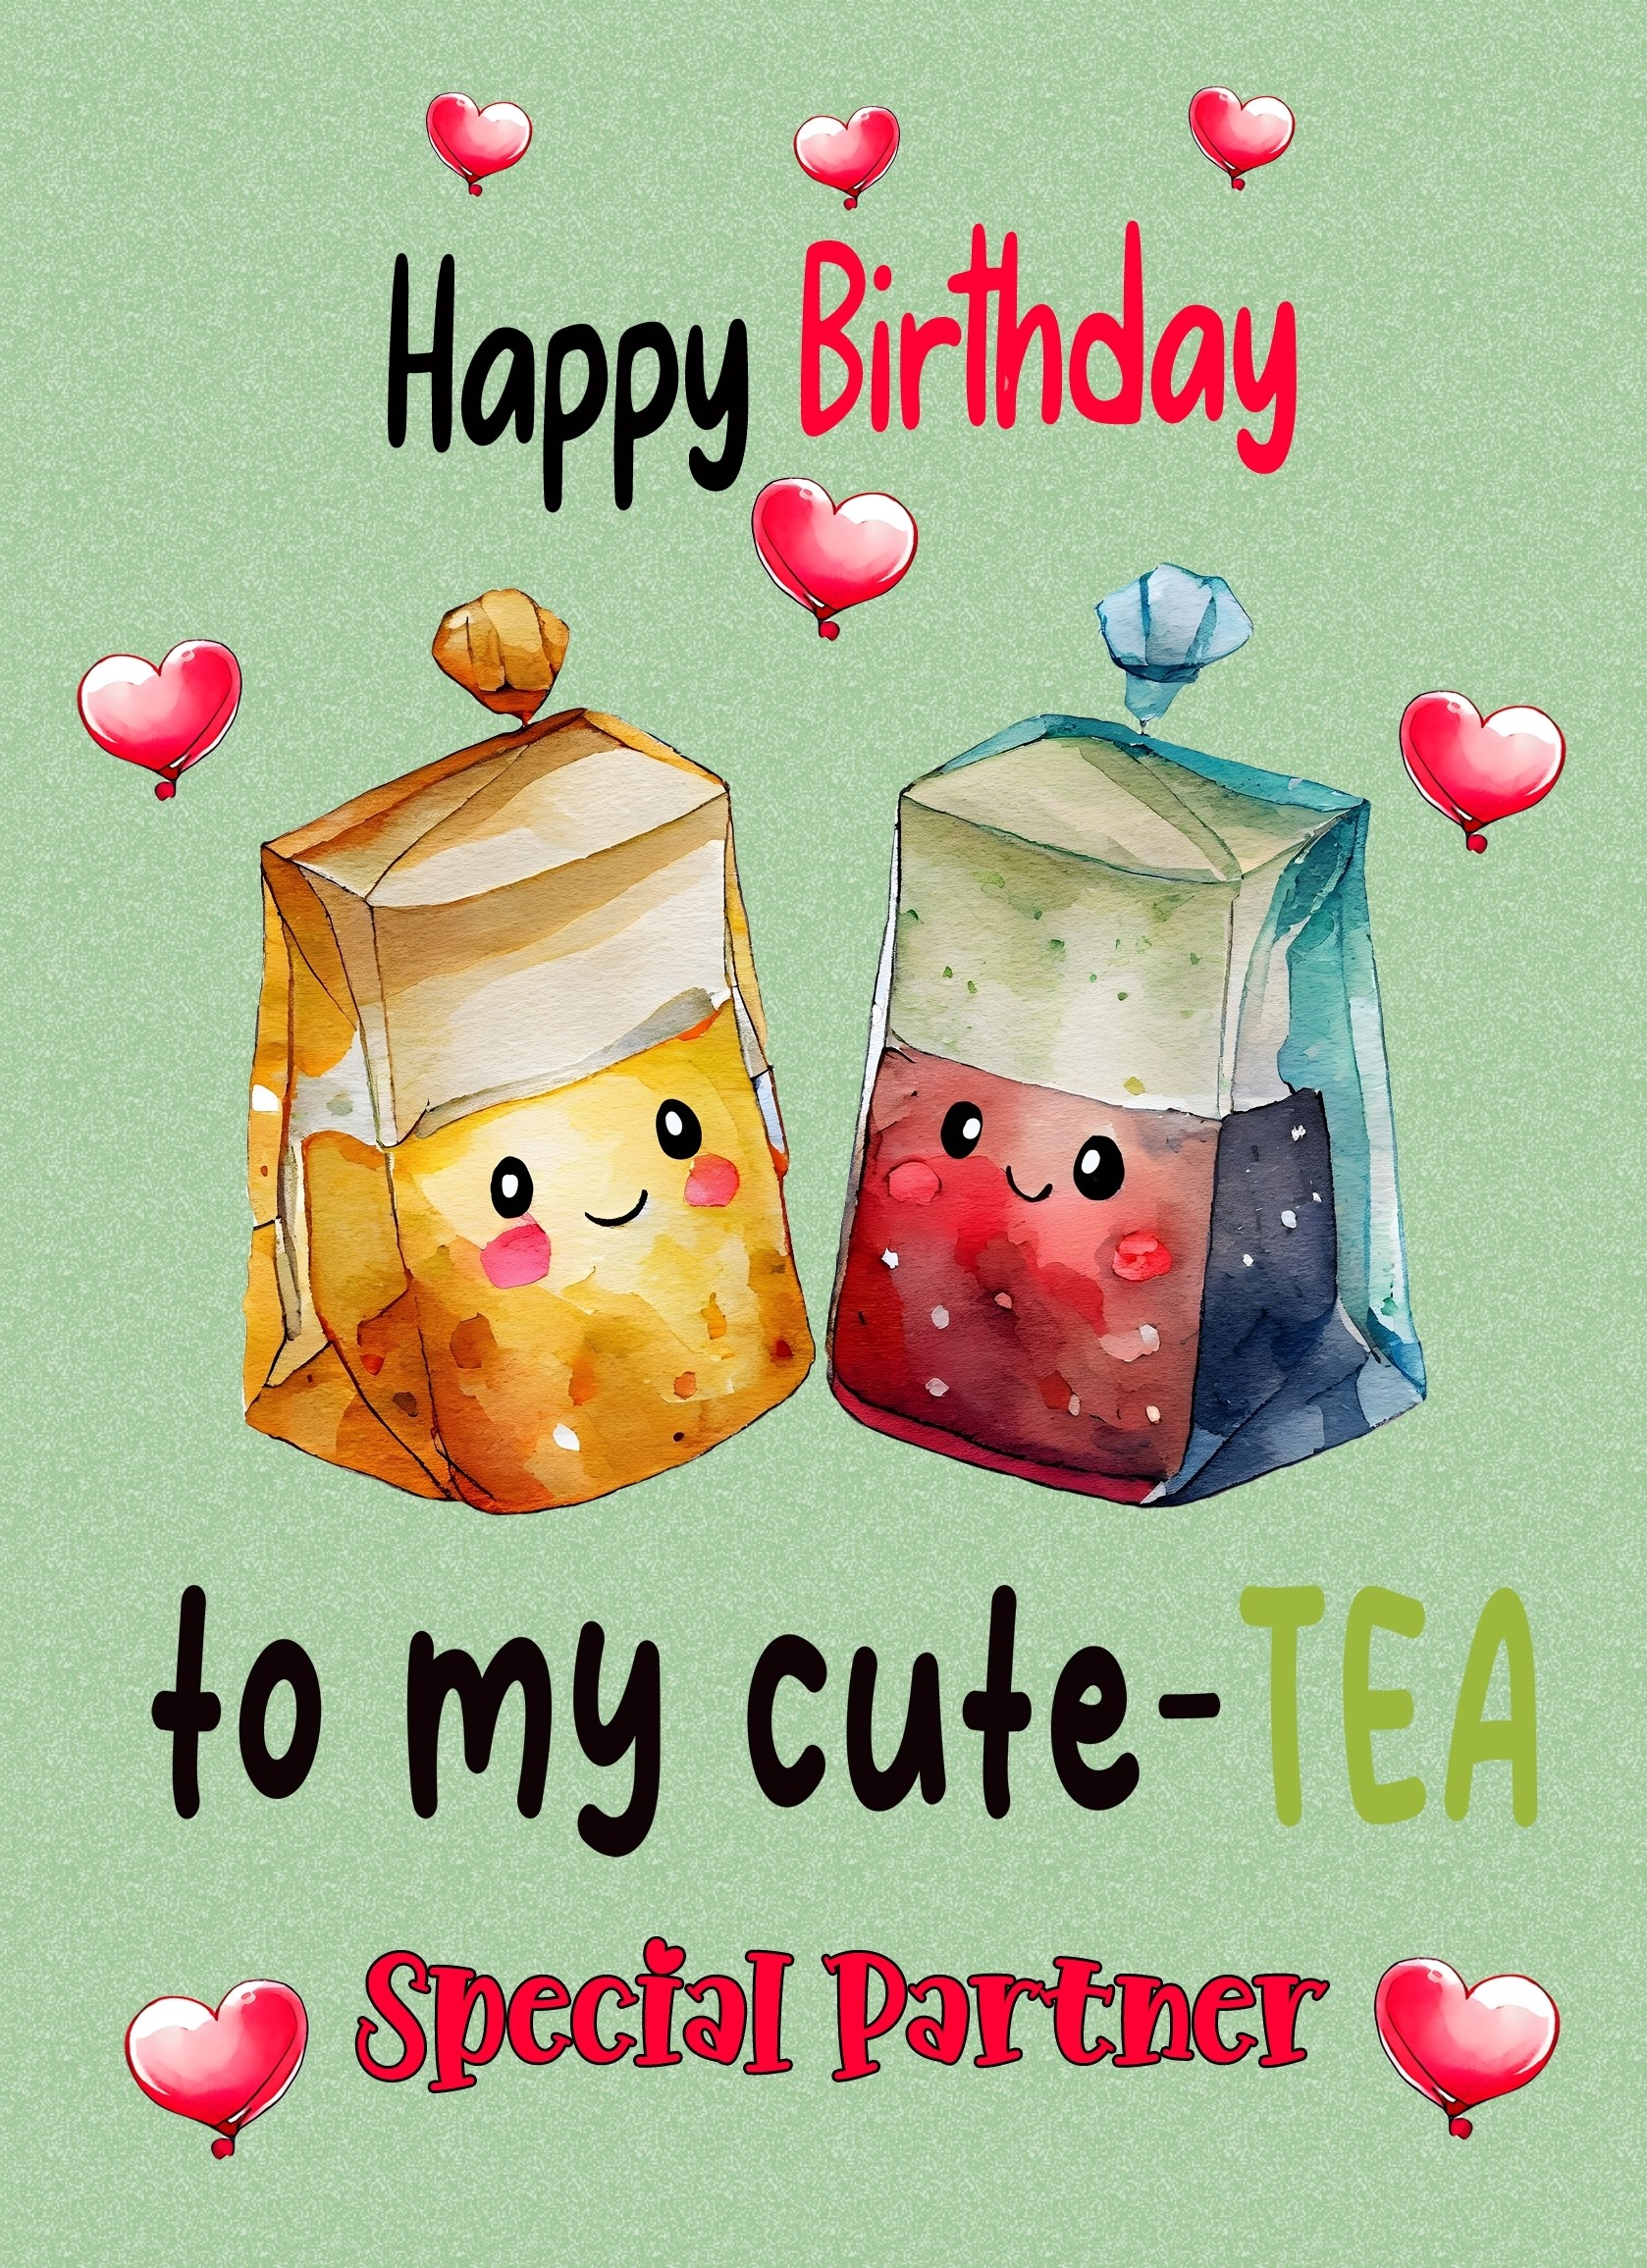 Funny Pun Romantic Birthday Card for Partner (Cute Tea)